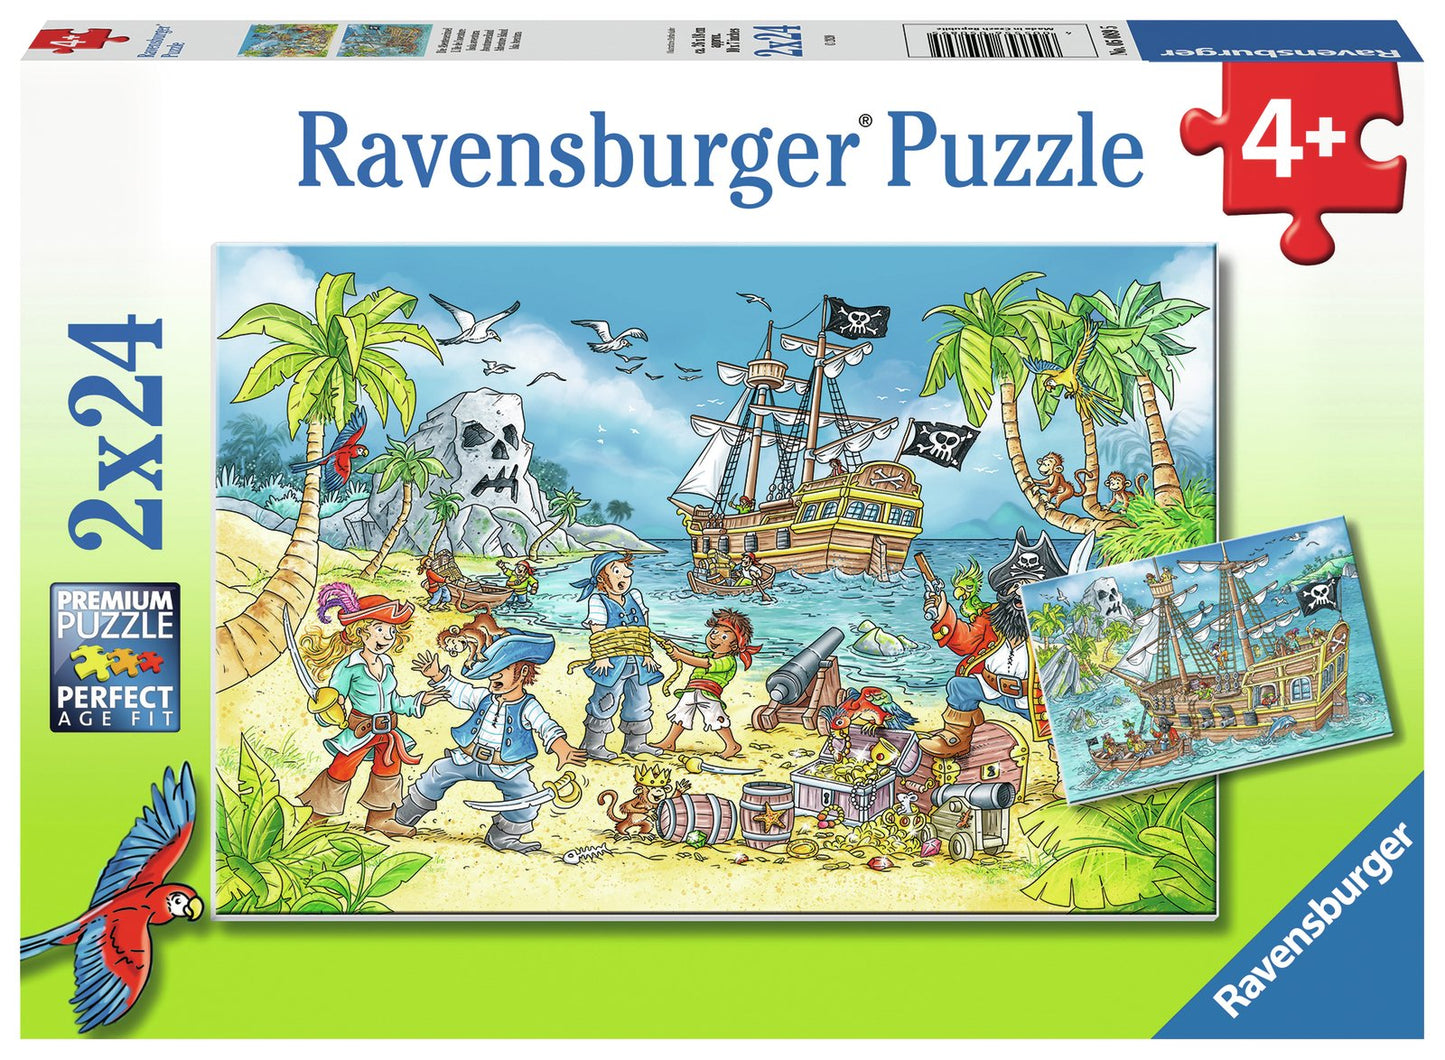 Ravensburger - Adventure Island Puzzle 2x24pc